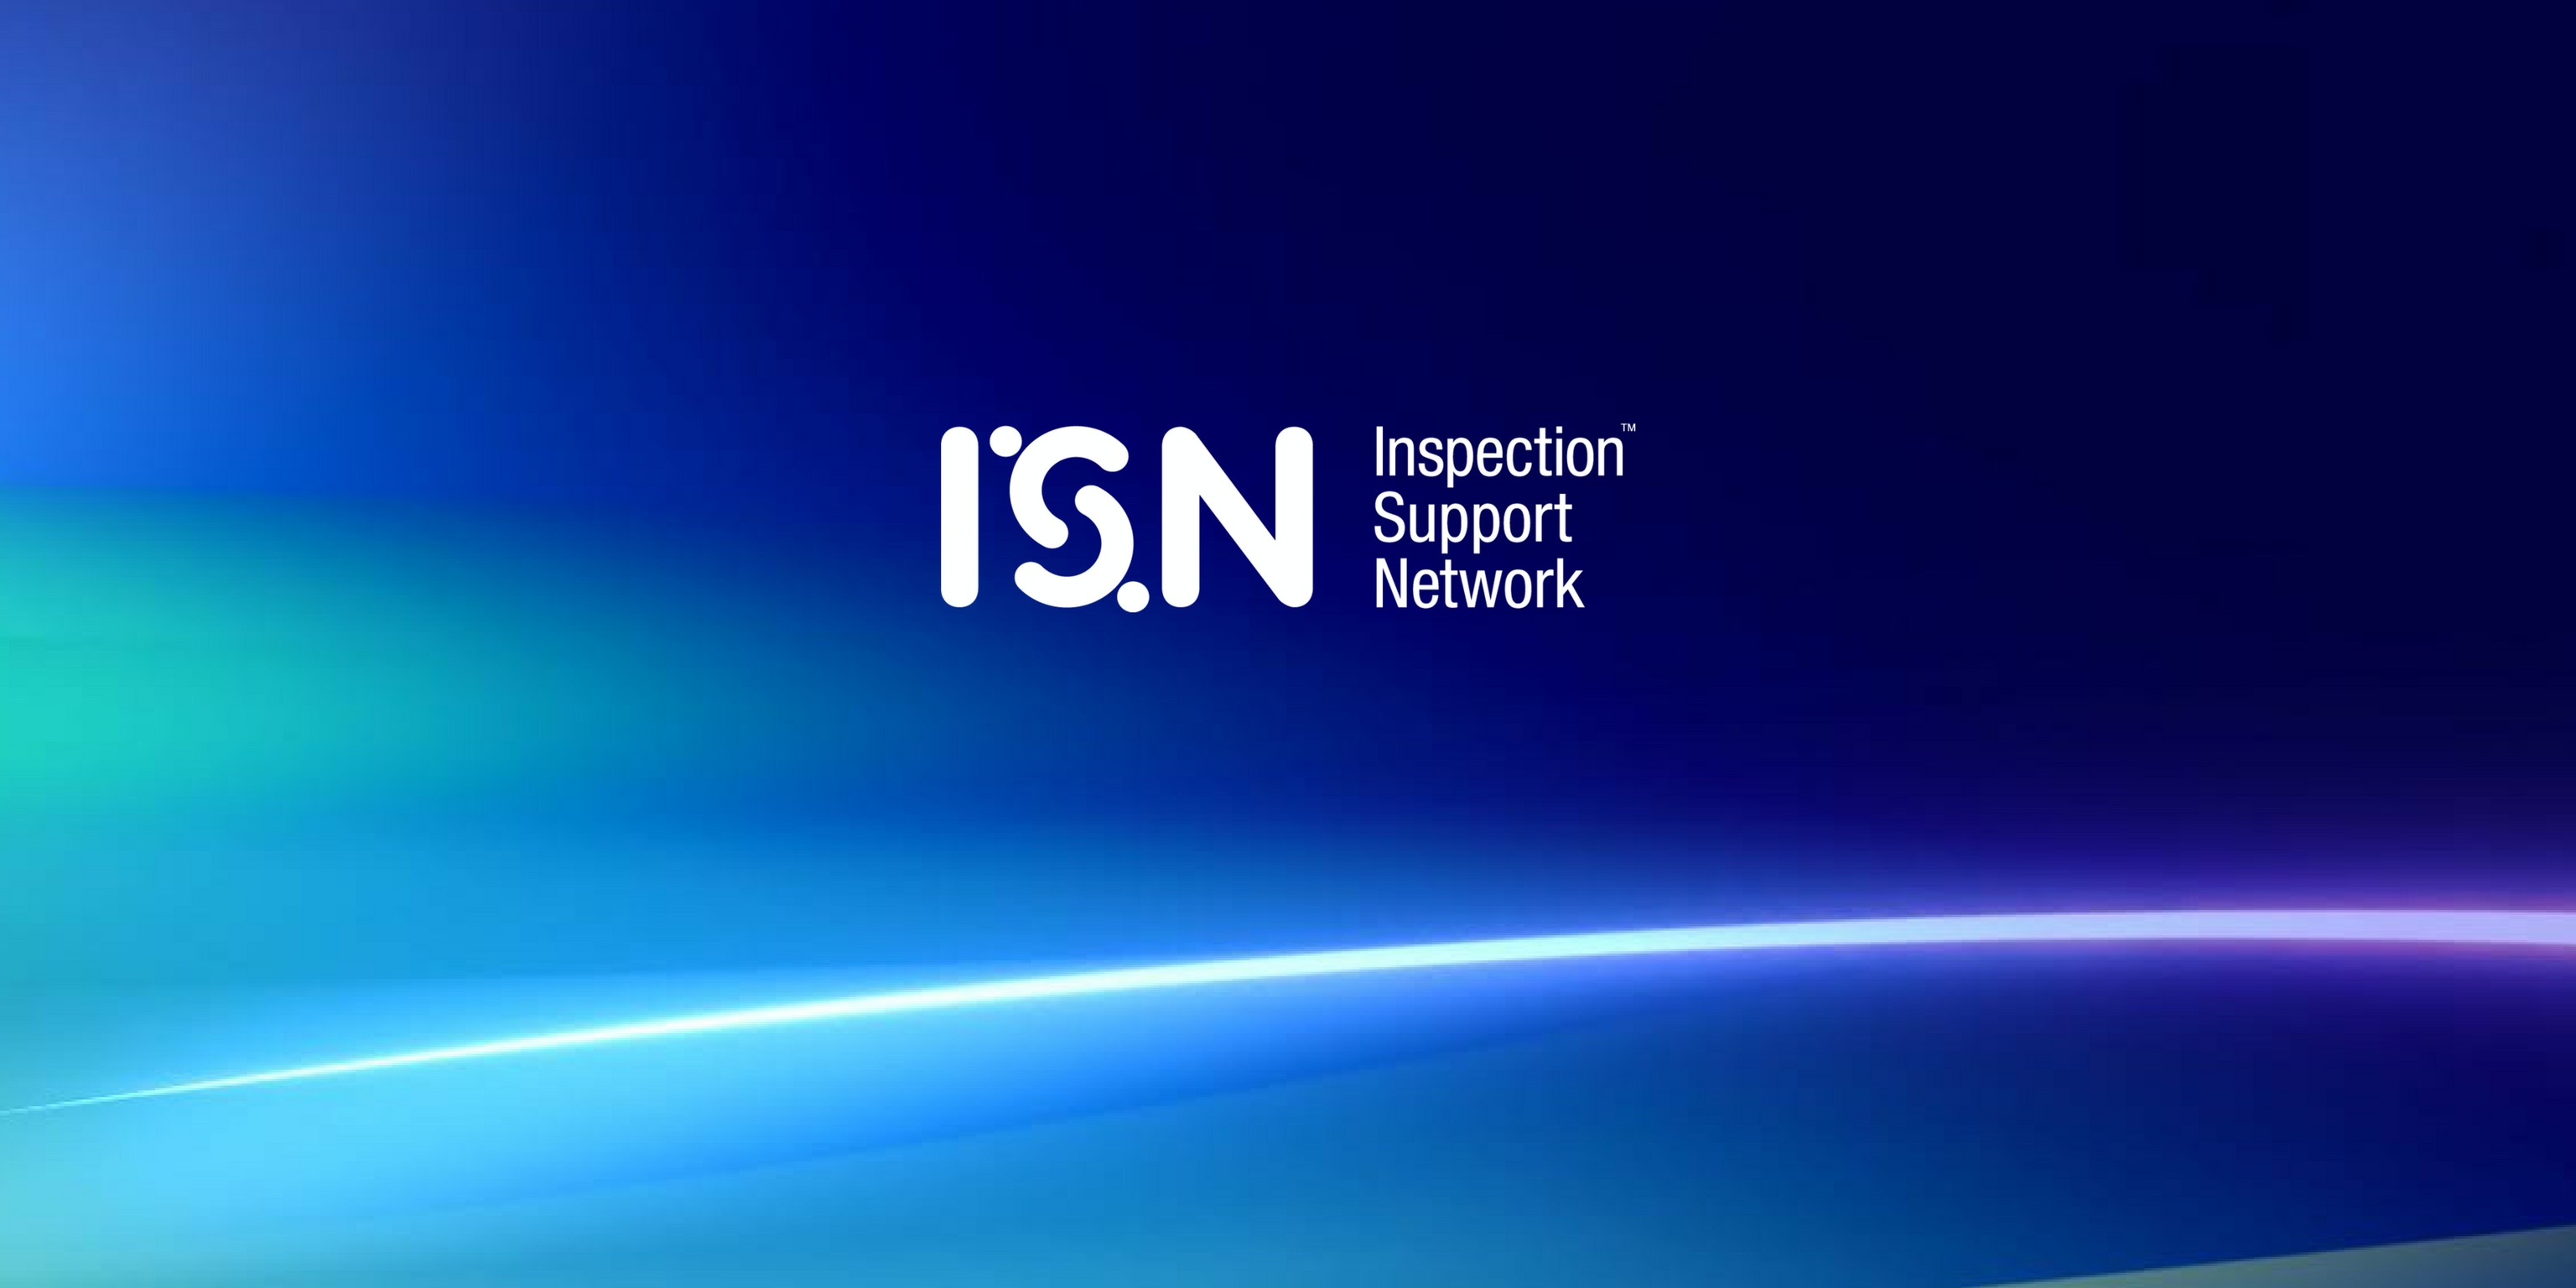 Inspection Support Network | LinkedIn